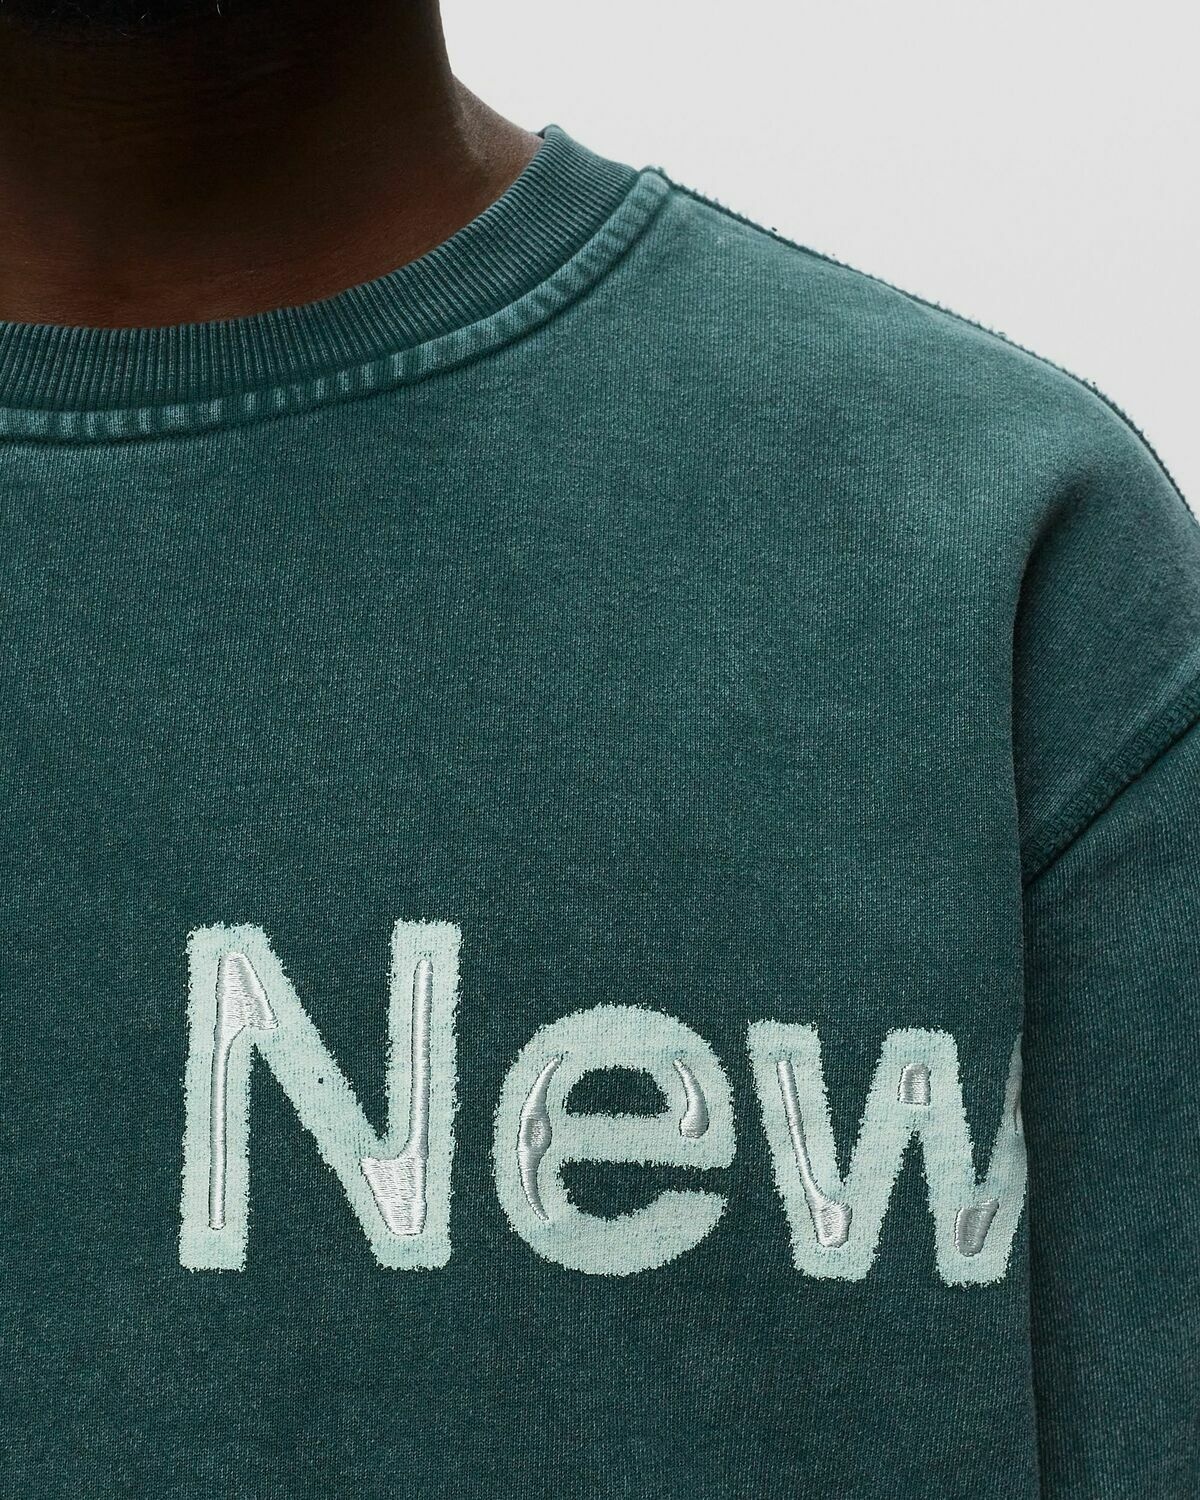 New Amsterdam Washed Name Sweat Green - Mens - Sweatshirts New